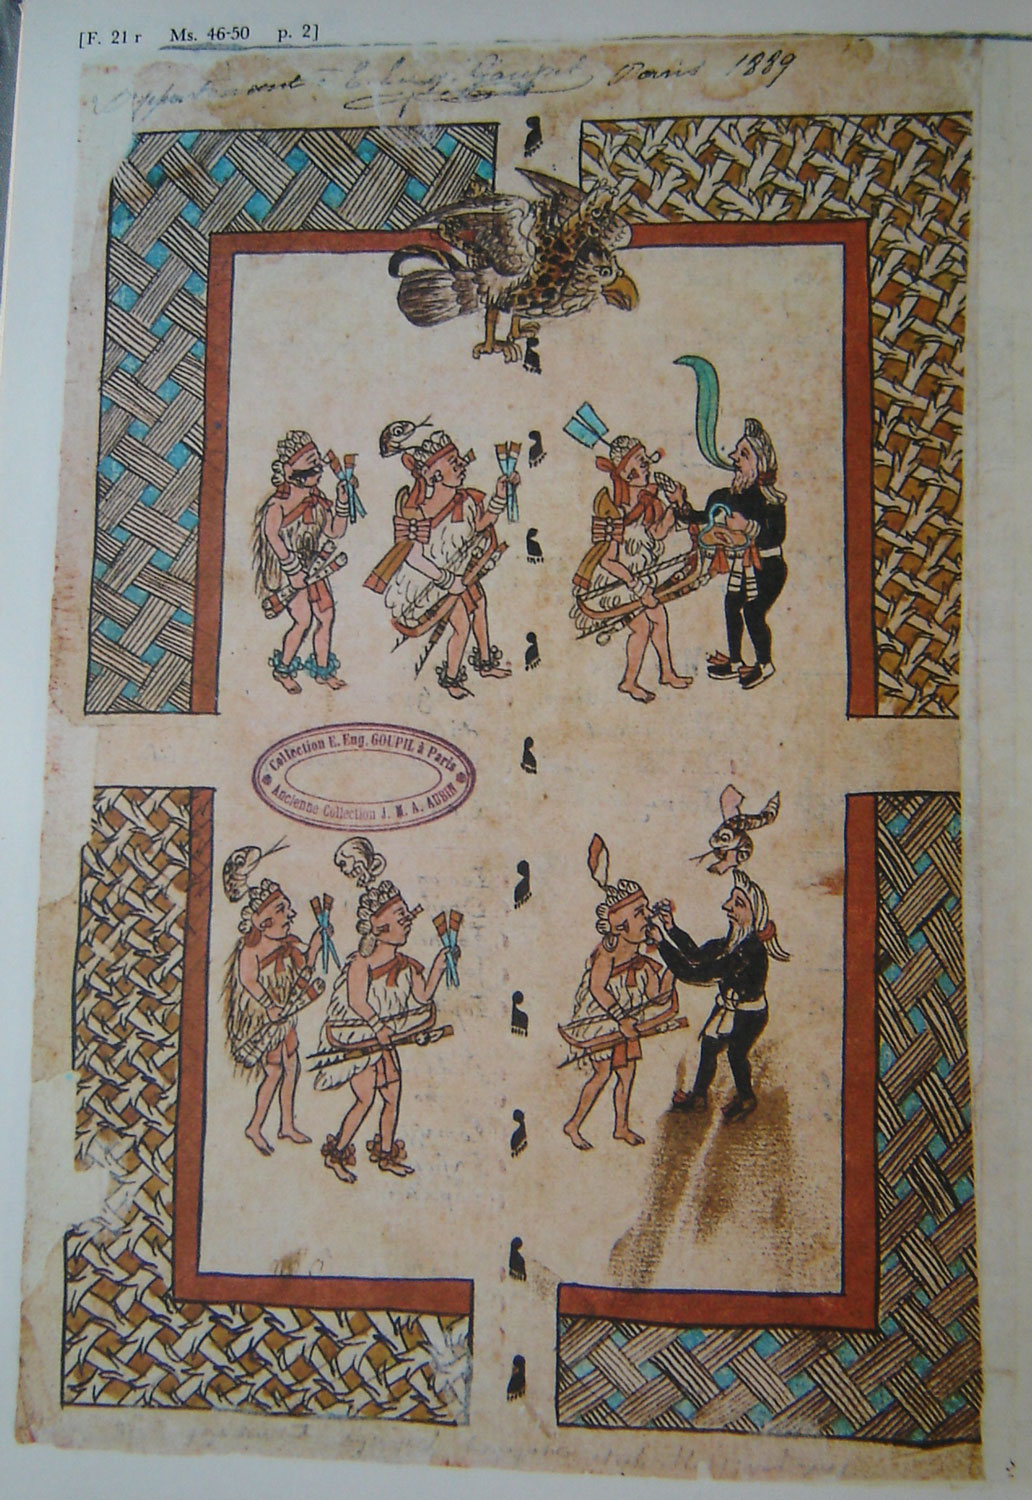 Historia Tolteca-Chichimeca o Anales de Cuauhtinchan, Fo21r-Ms-46-50-p-2. Siglo XVI